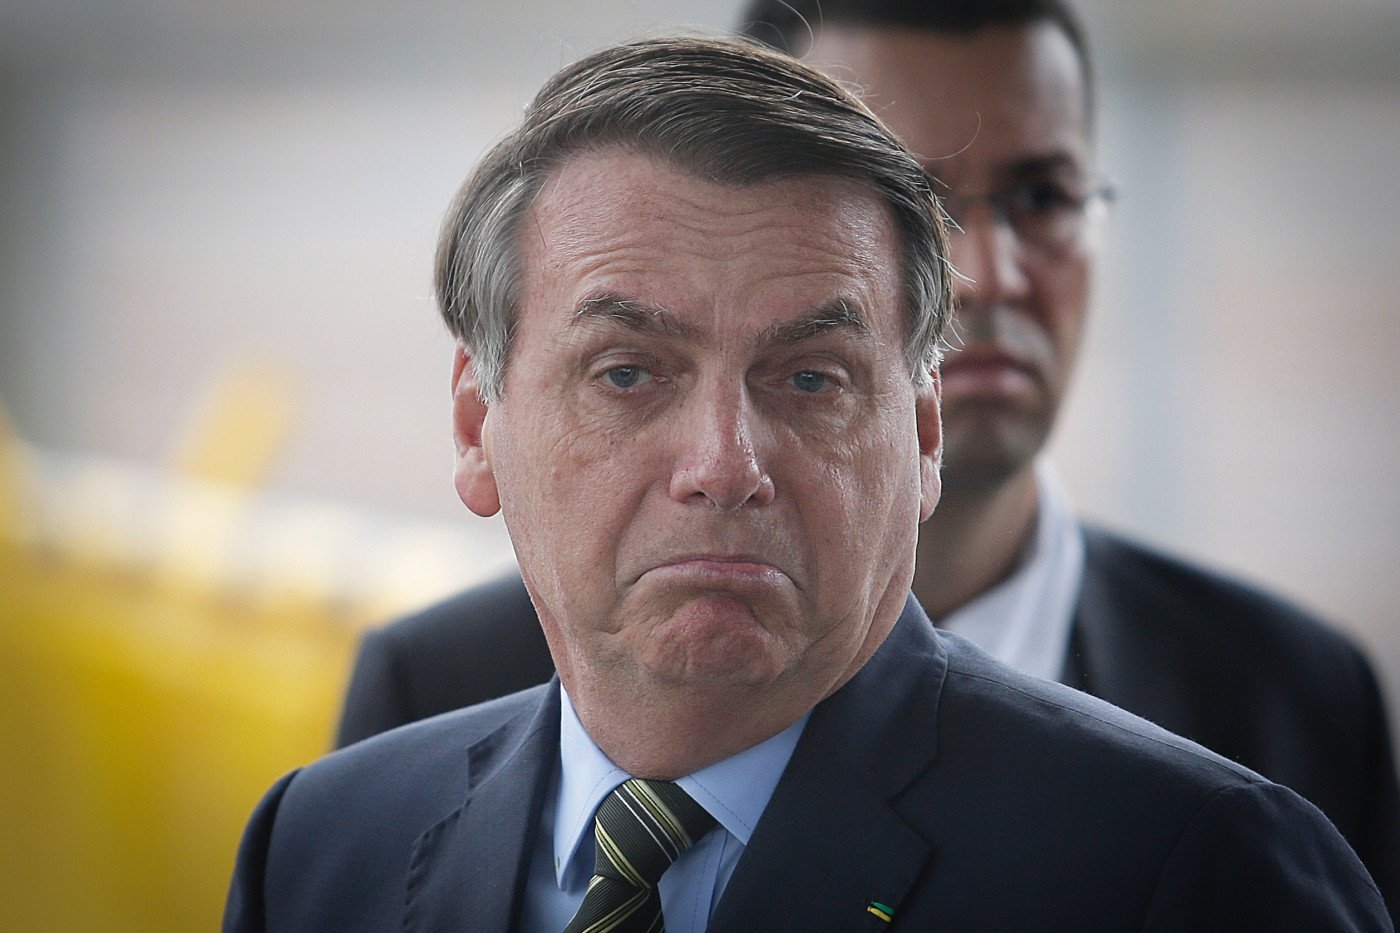 Jair Bolsonaro has had enough of being dragged through the mud by senators hostile to him.